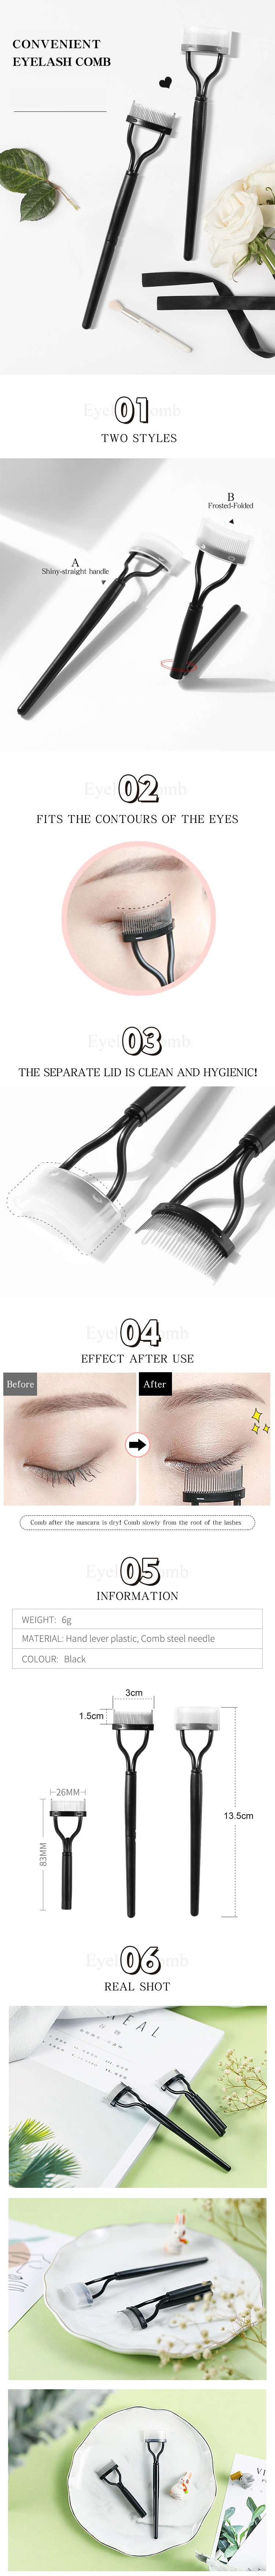 ASIANAIL High quality Professional Makeup Tools Eyebrow Eyelash Comb